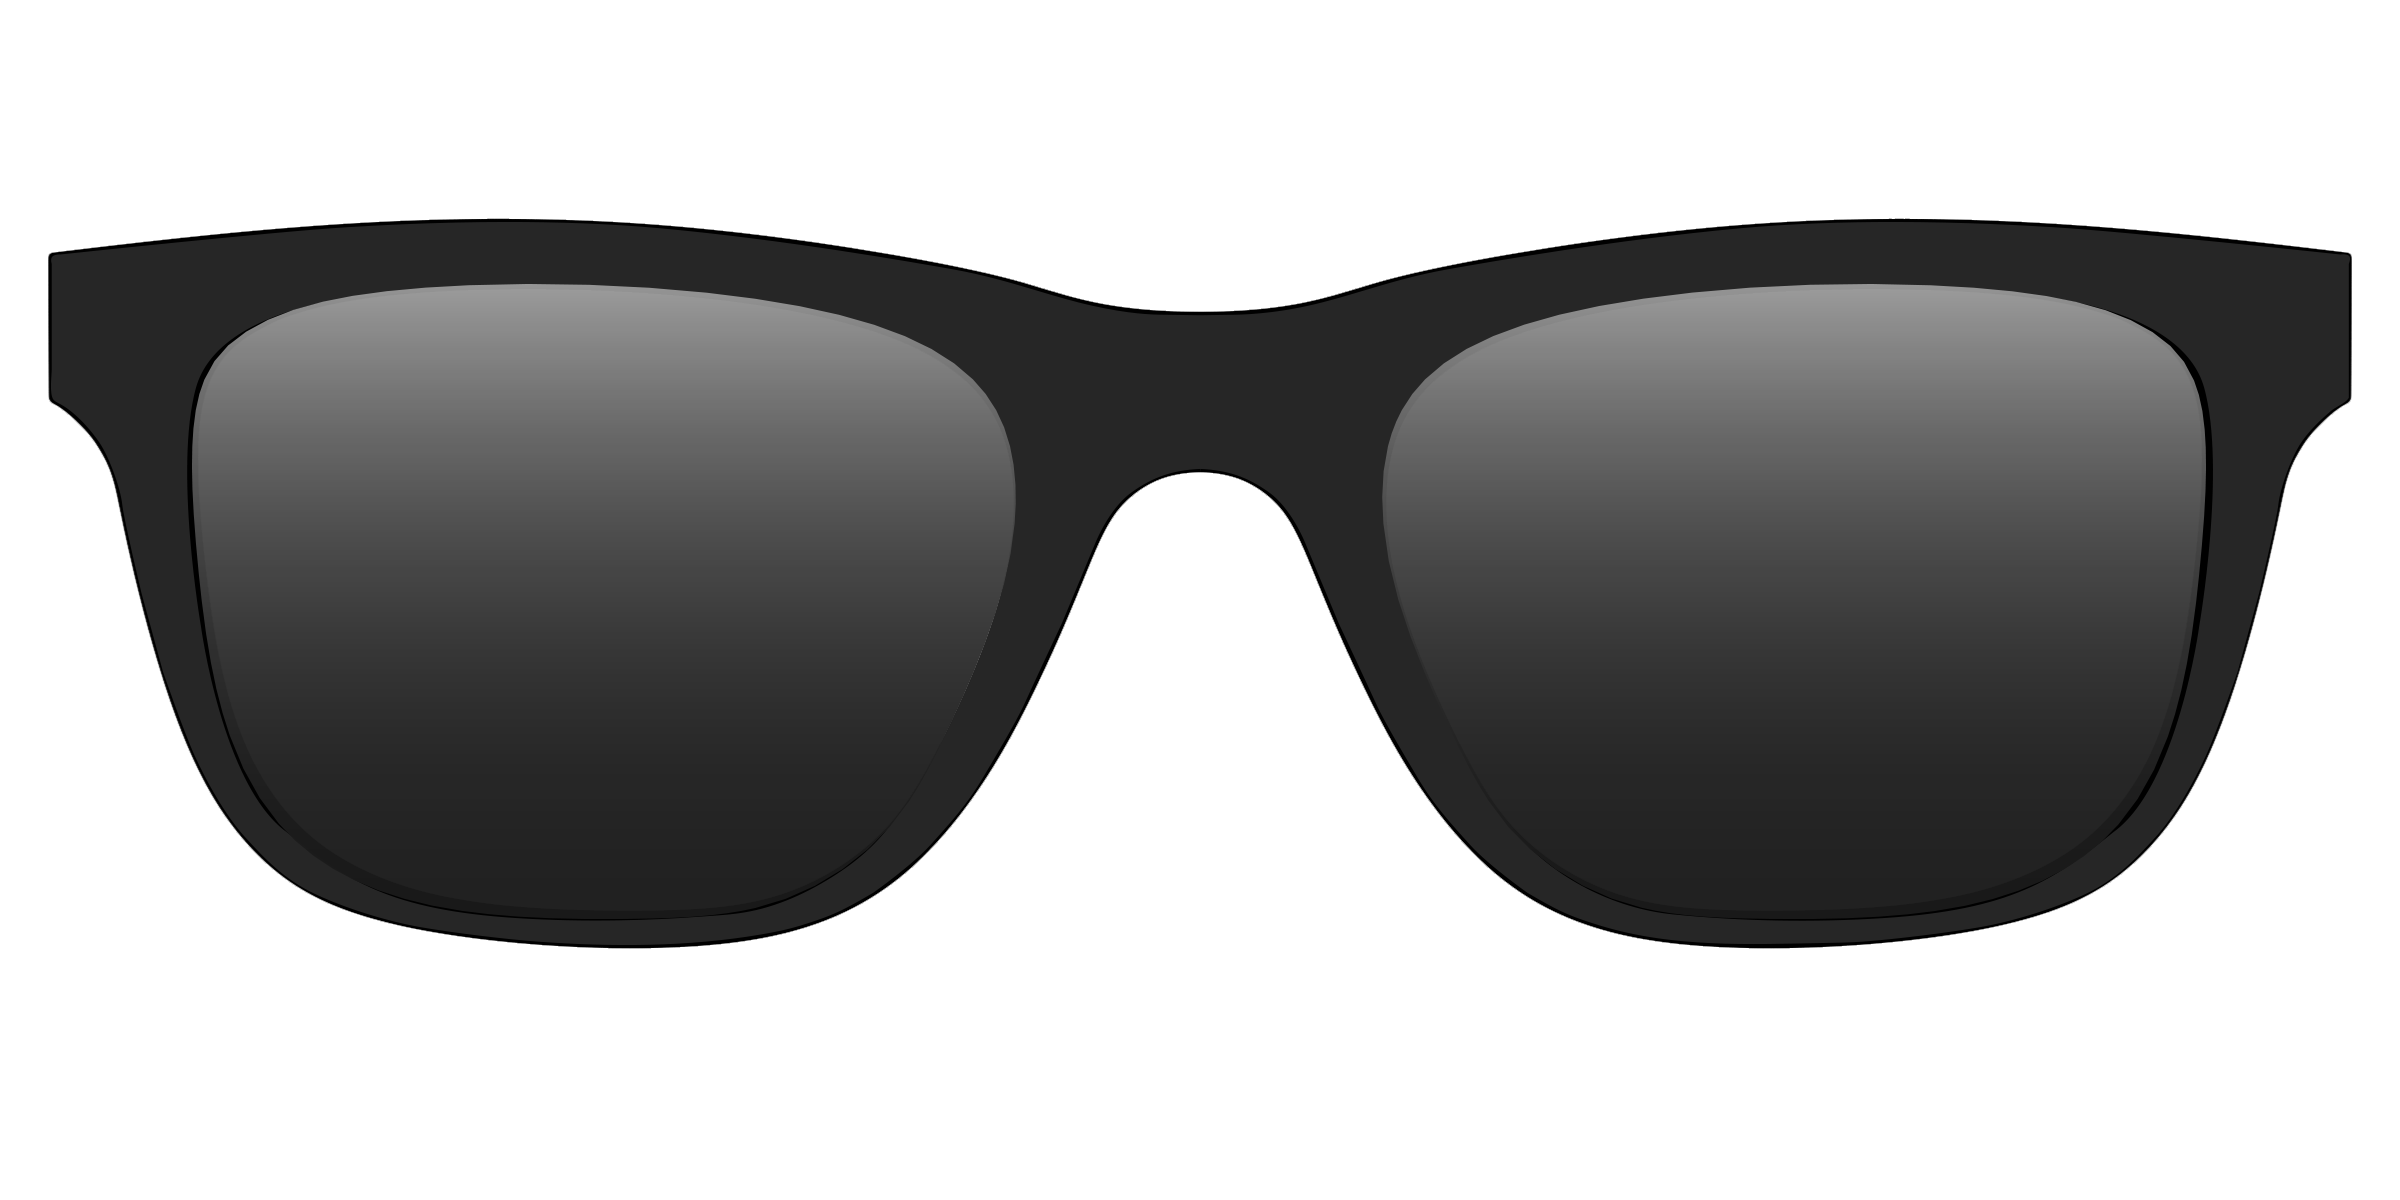 The Best Sunglasses for Your Face Shape | Sunski – Sunski